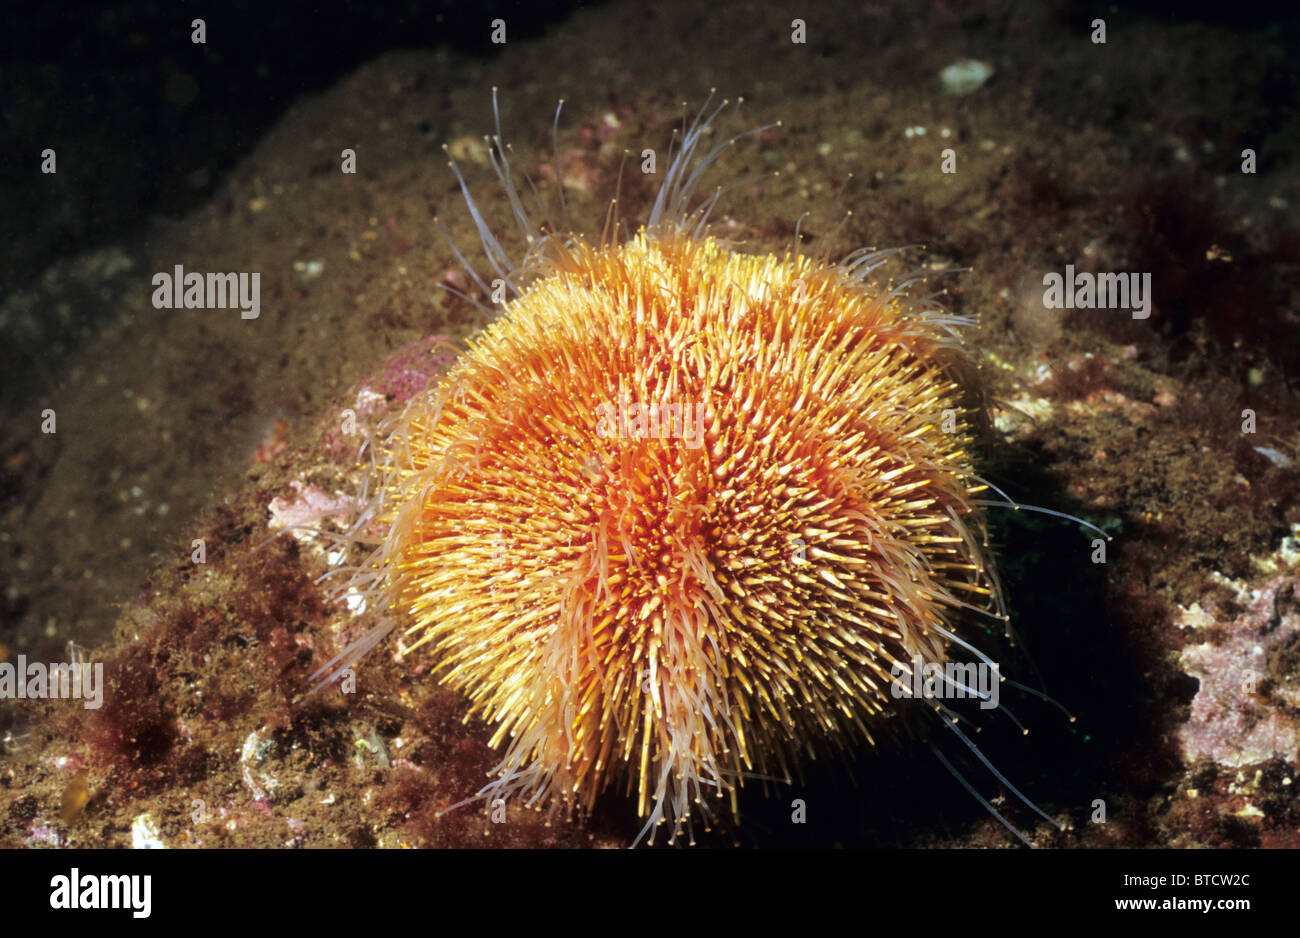 Sea Urchin, Common or Edible. Underwater marine life off the coast of Scotland Stock Photo